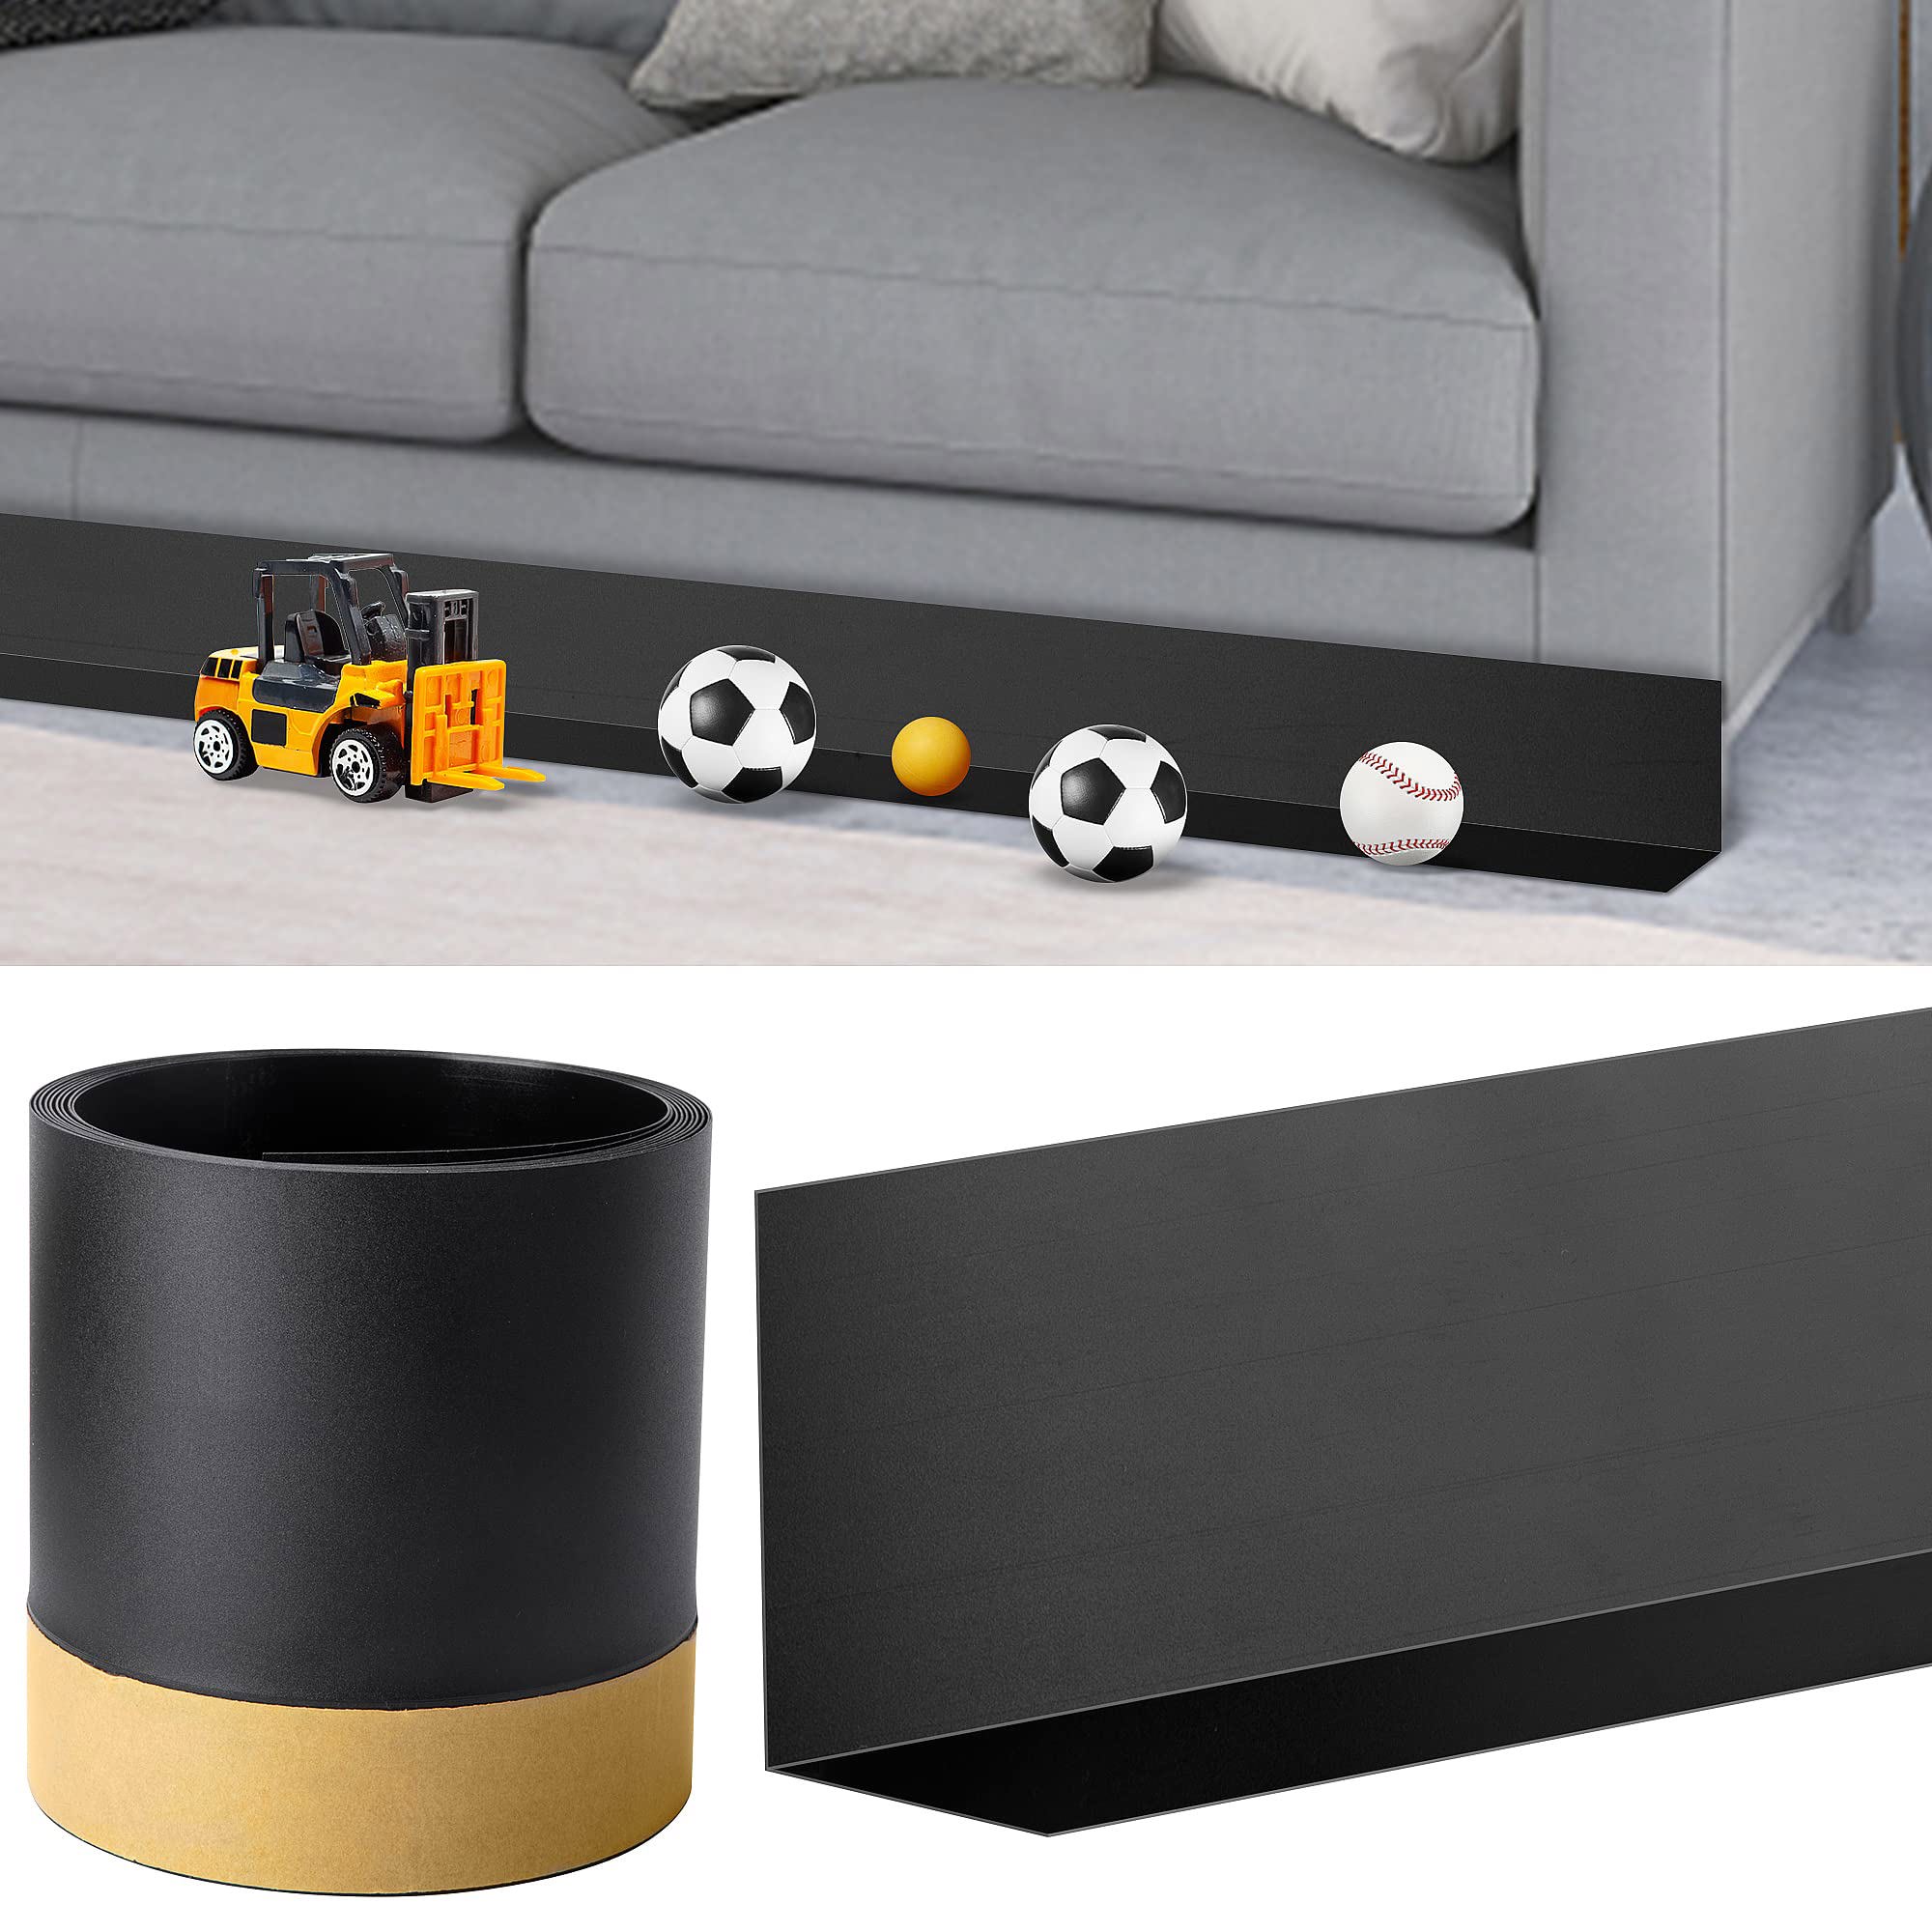 Under Couch Blocker,Adjustable Toy Blocker for Under Couch,Stop Things from  Going Under Couch Sofa Bed Furniture